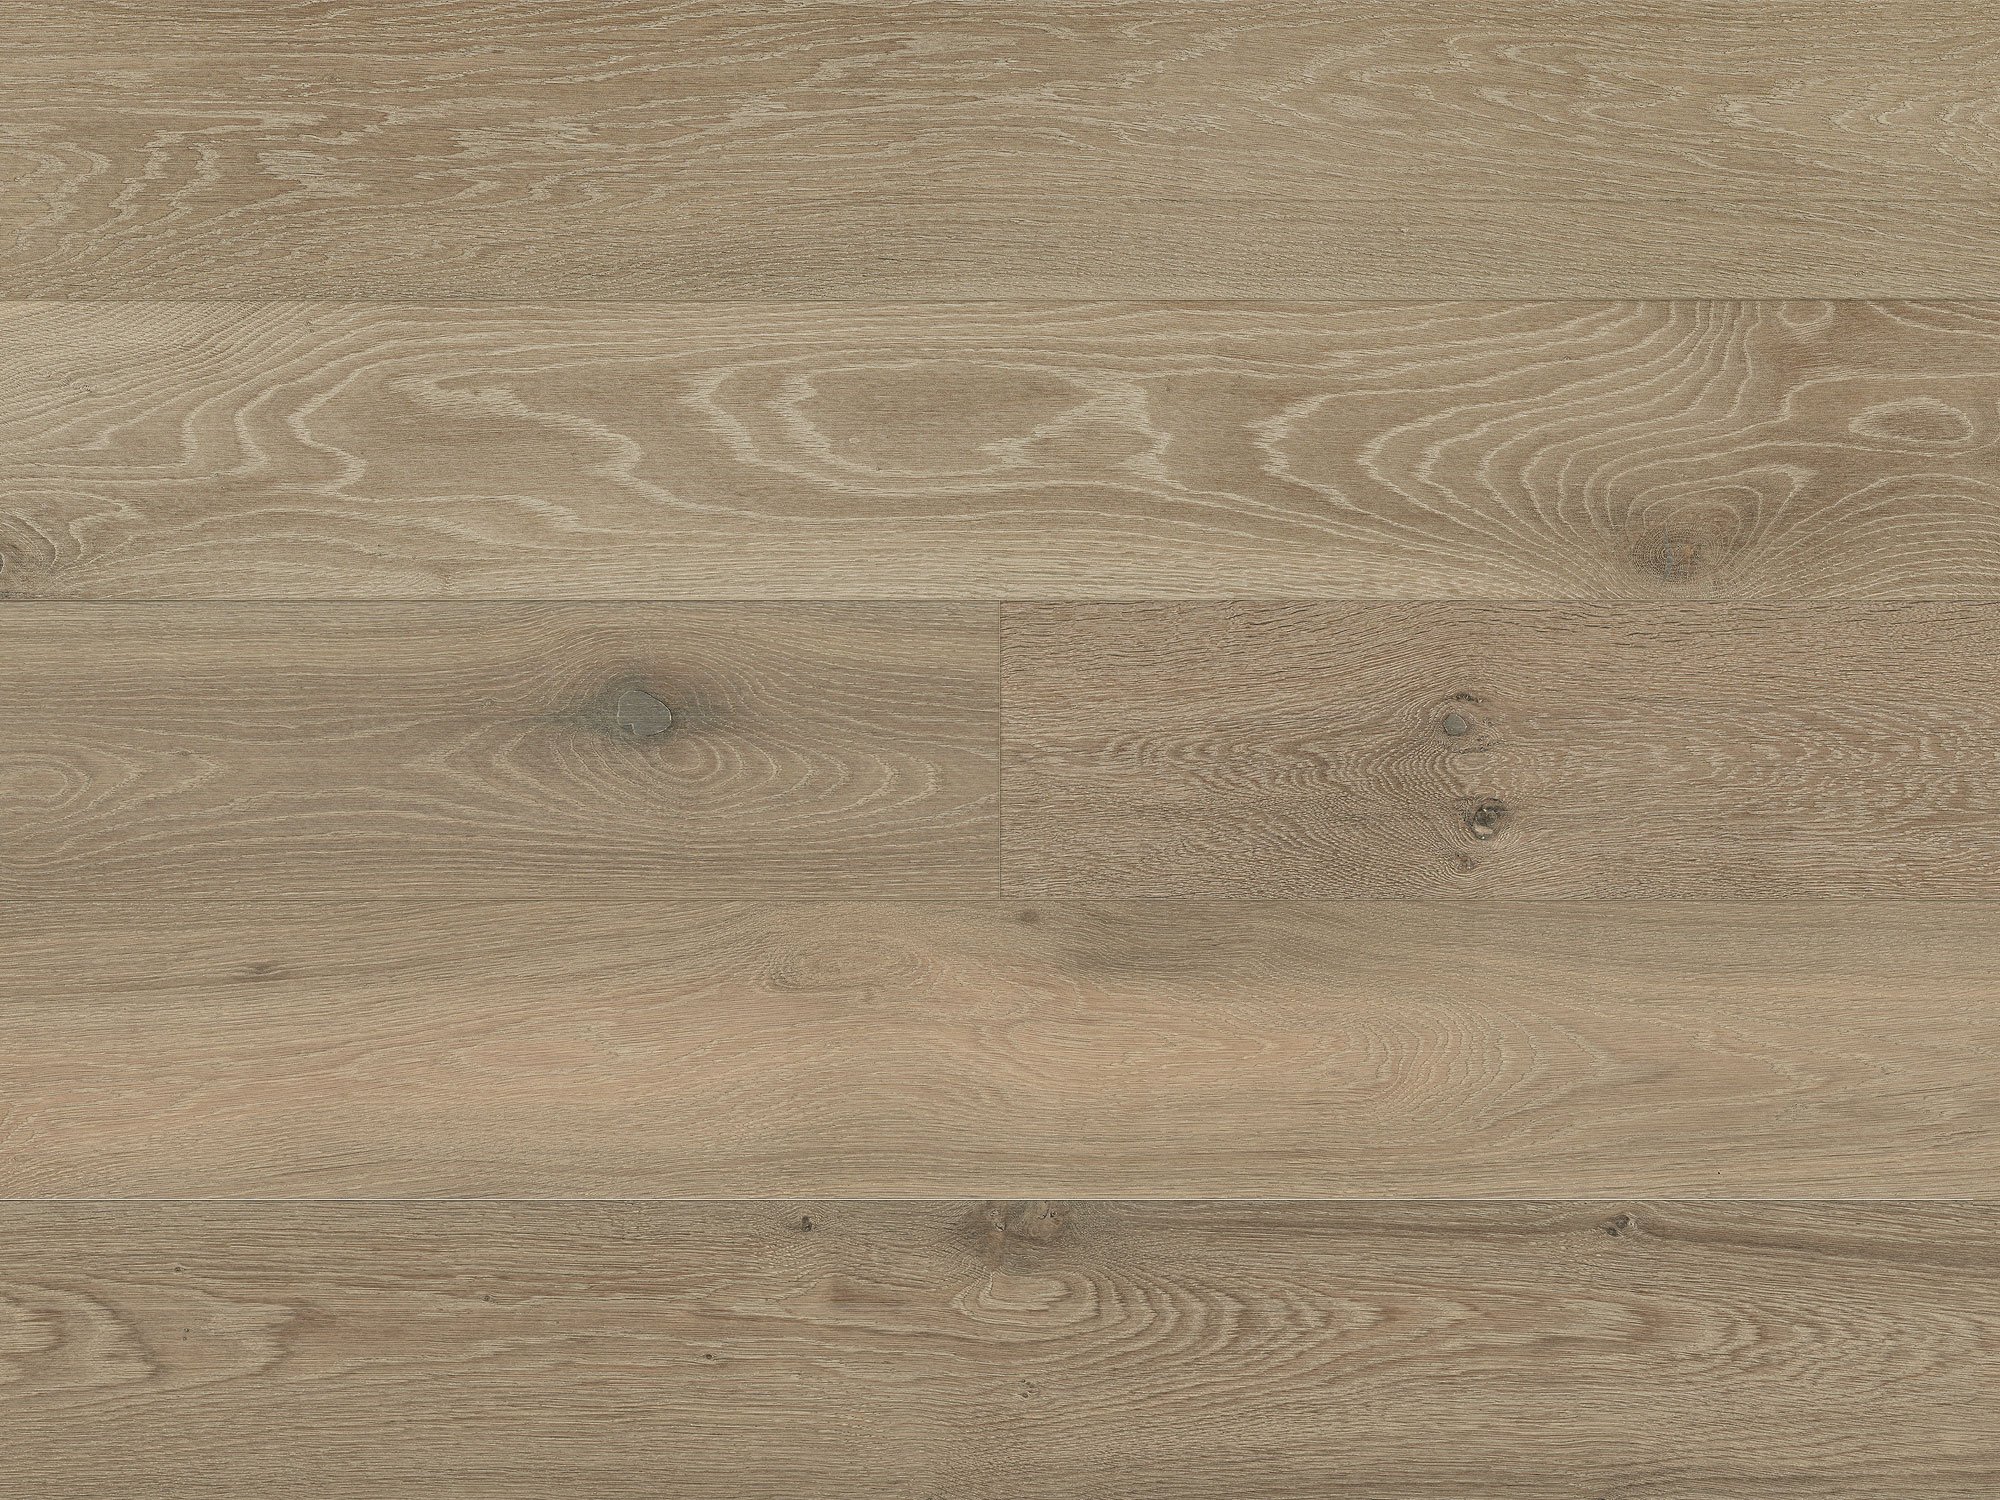 product ENG MOREAU Artistique Collection Pravada Floors 300dpi 00RR White Oak Hardwood Floors